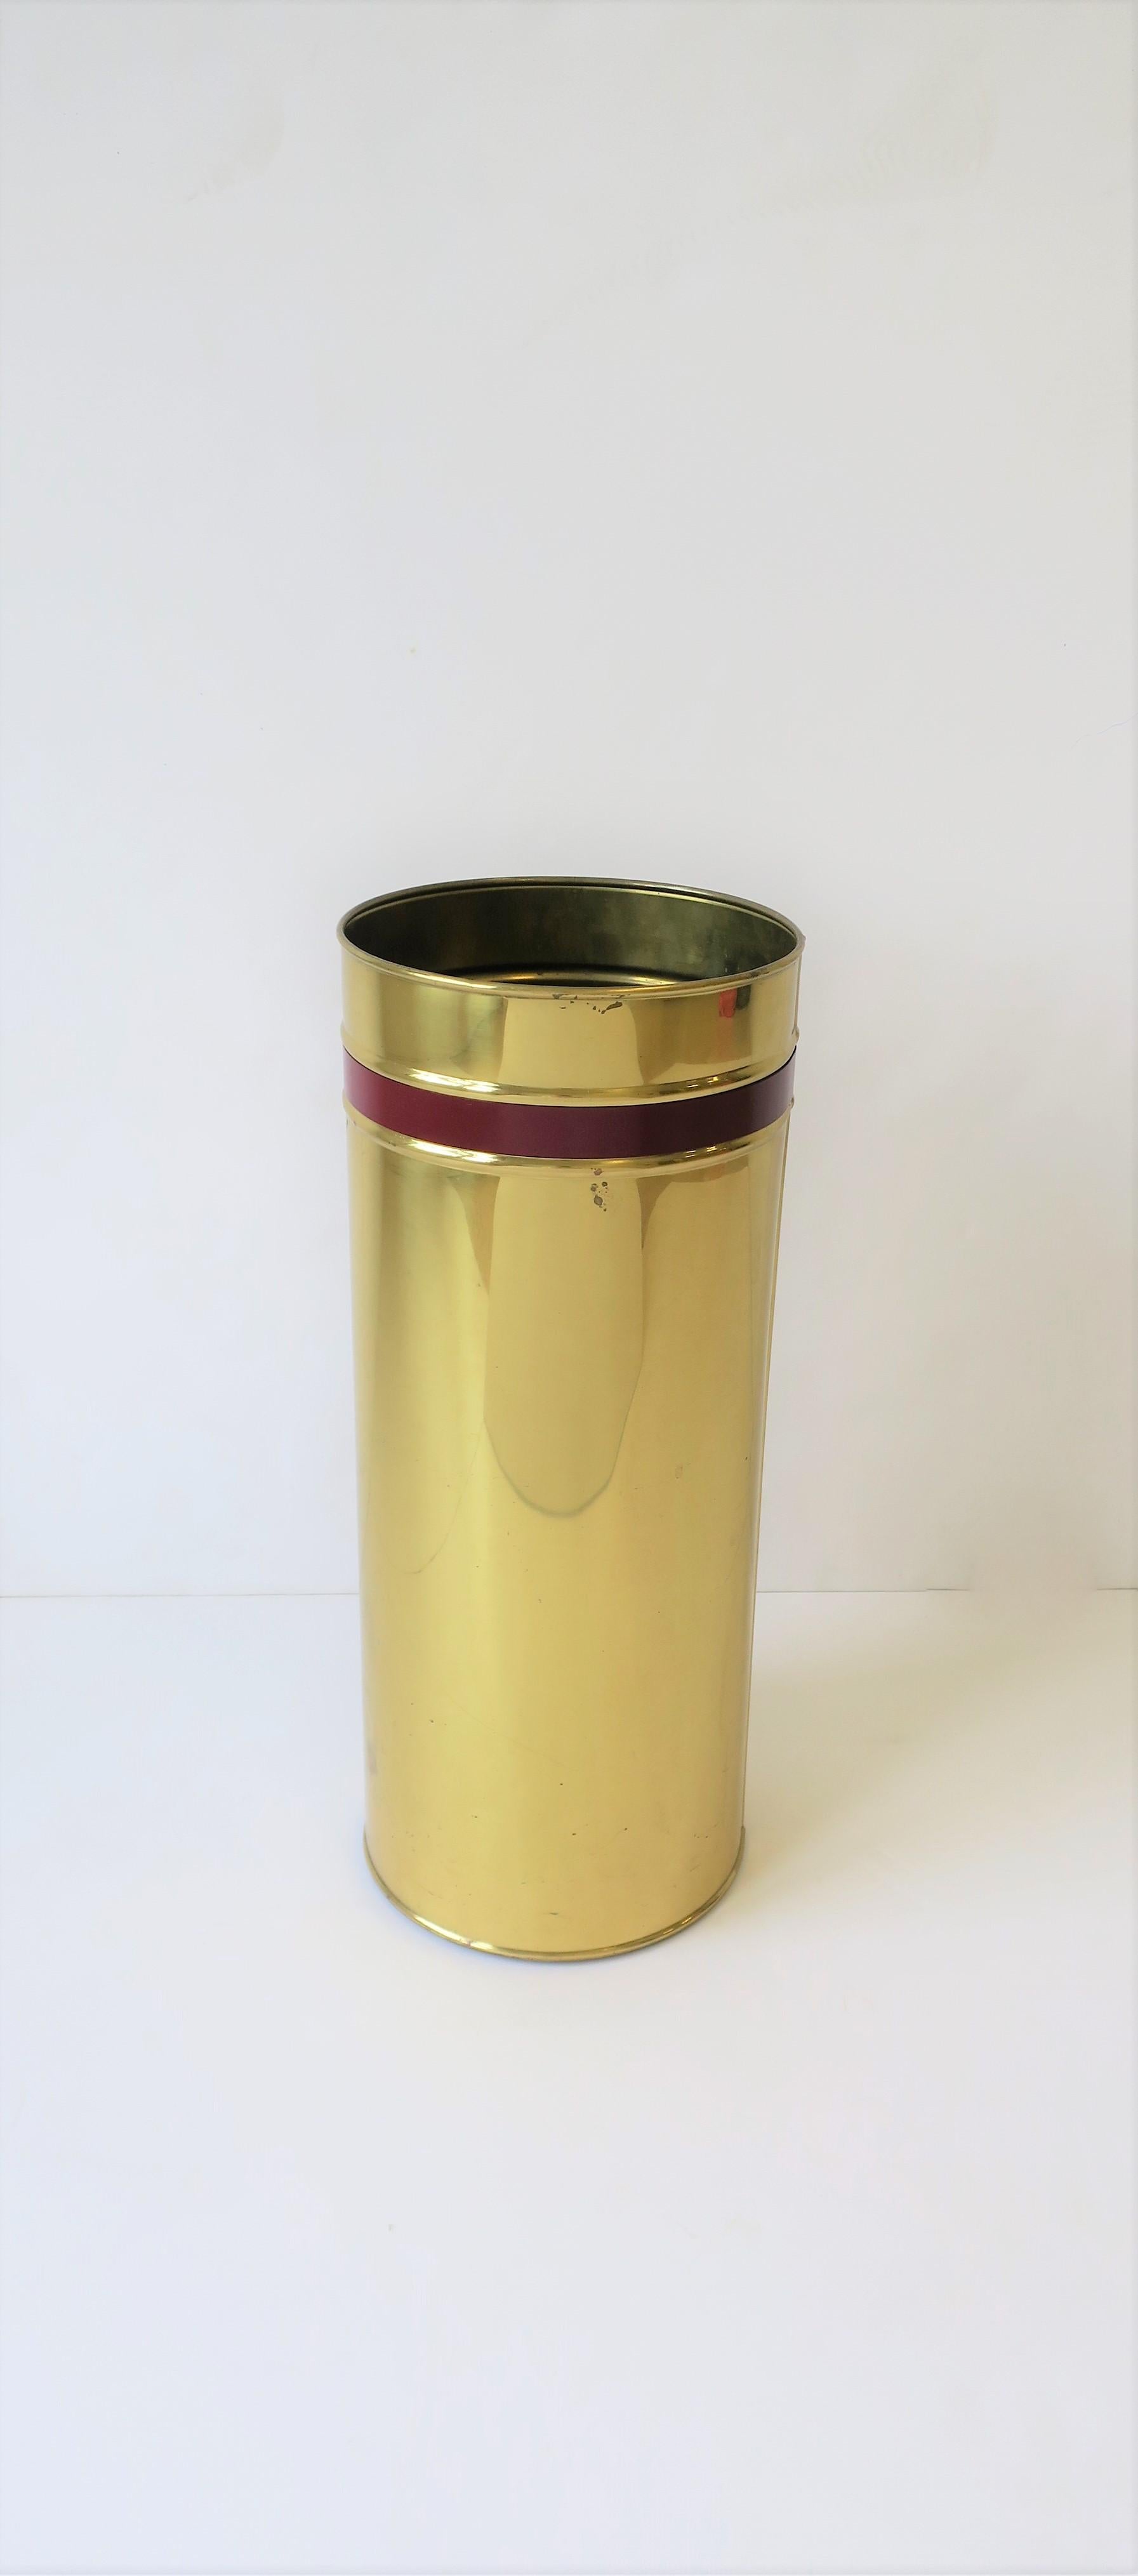 English Brass Umbrella Stand or Holder with Red Burgundy Stripe 5